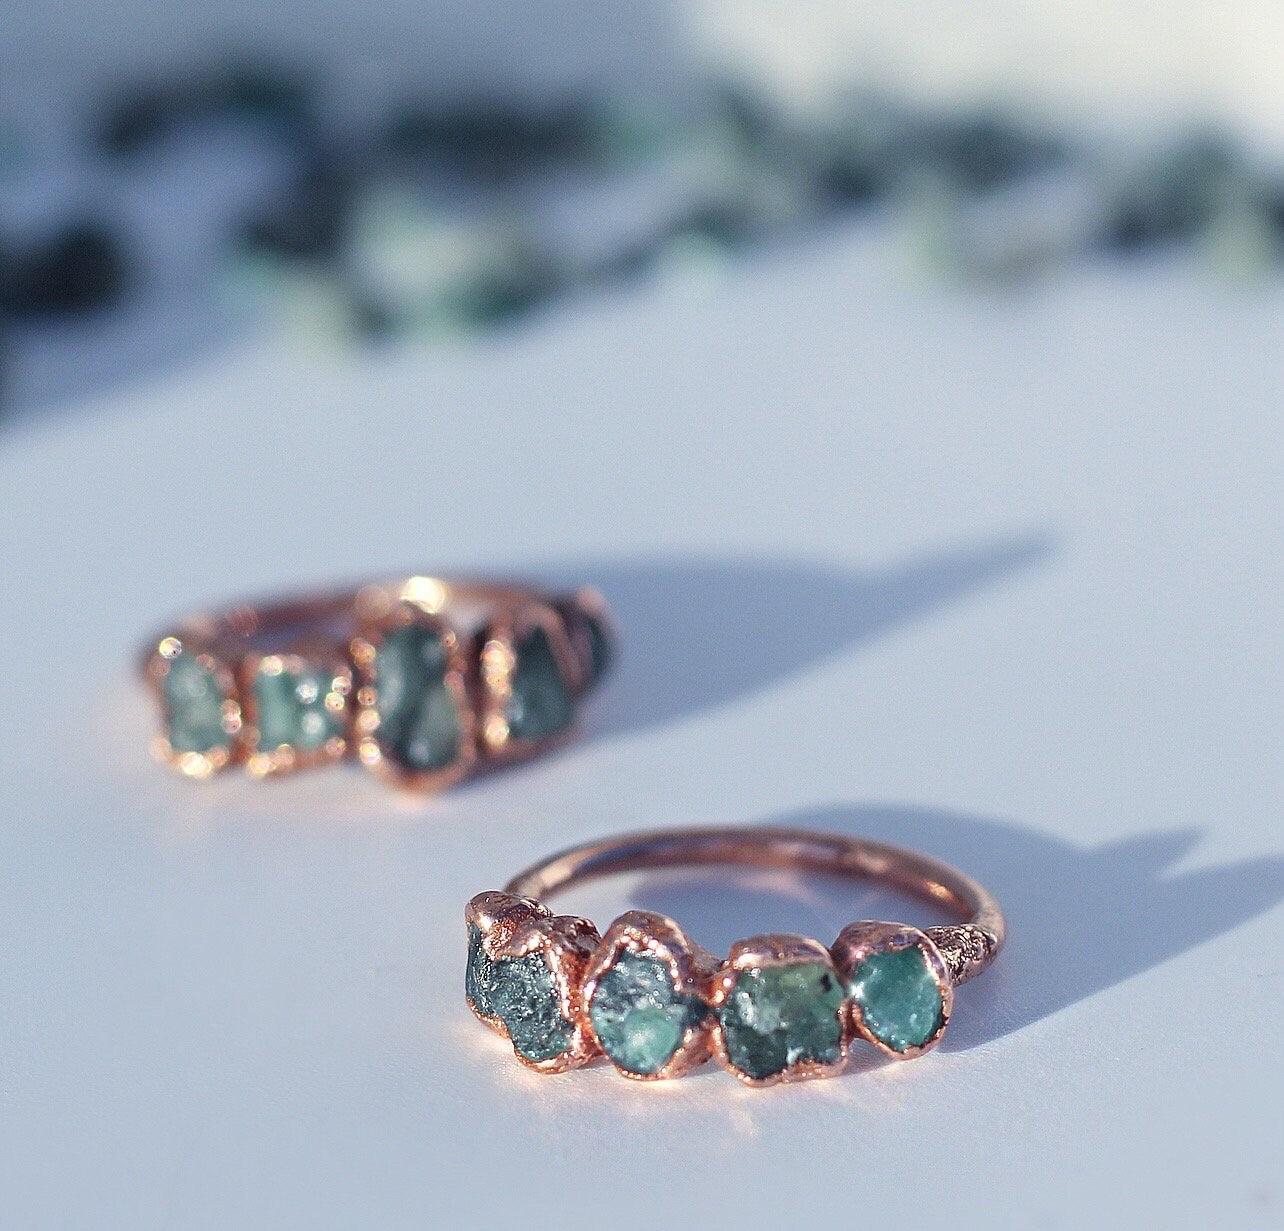 Raw Emerald Multi-Stone Ring in Copper, Natural Emerald Boho Ring, Unique Copper Gemstone Jewelry, Handcrafted Bohemian Accessory, Gift